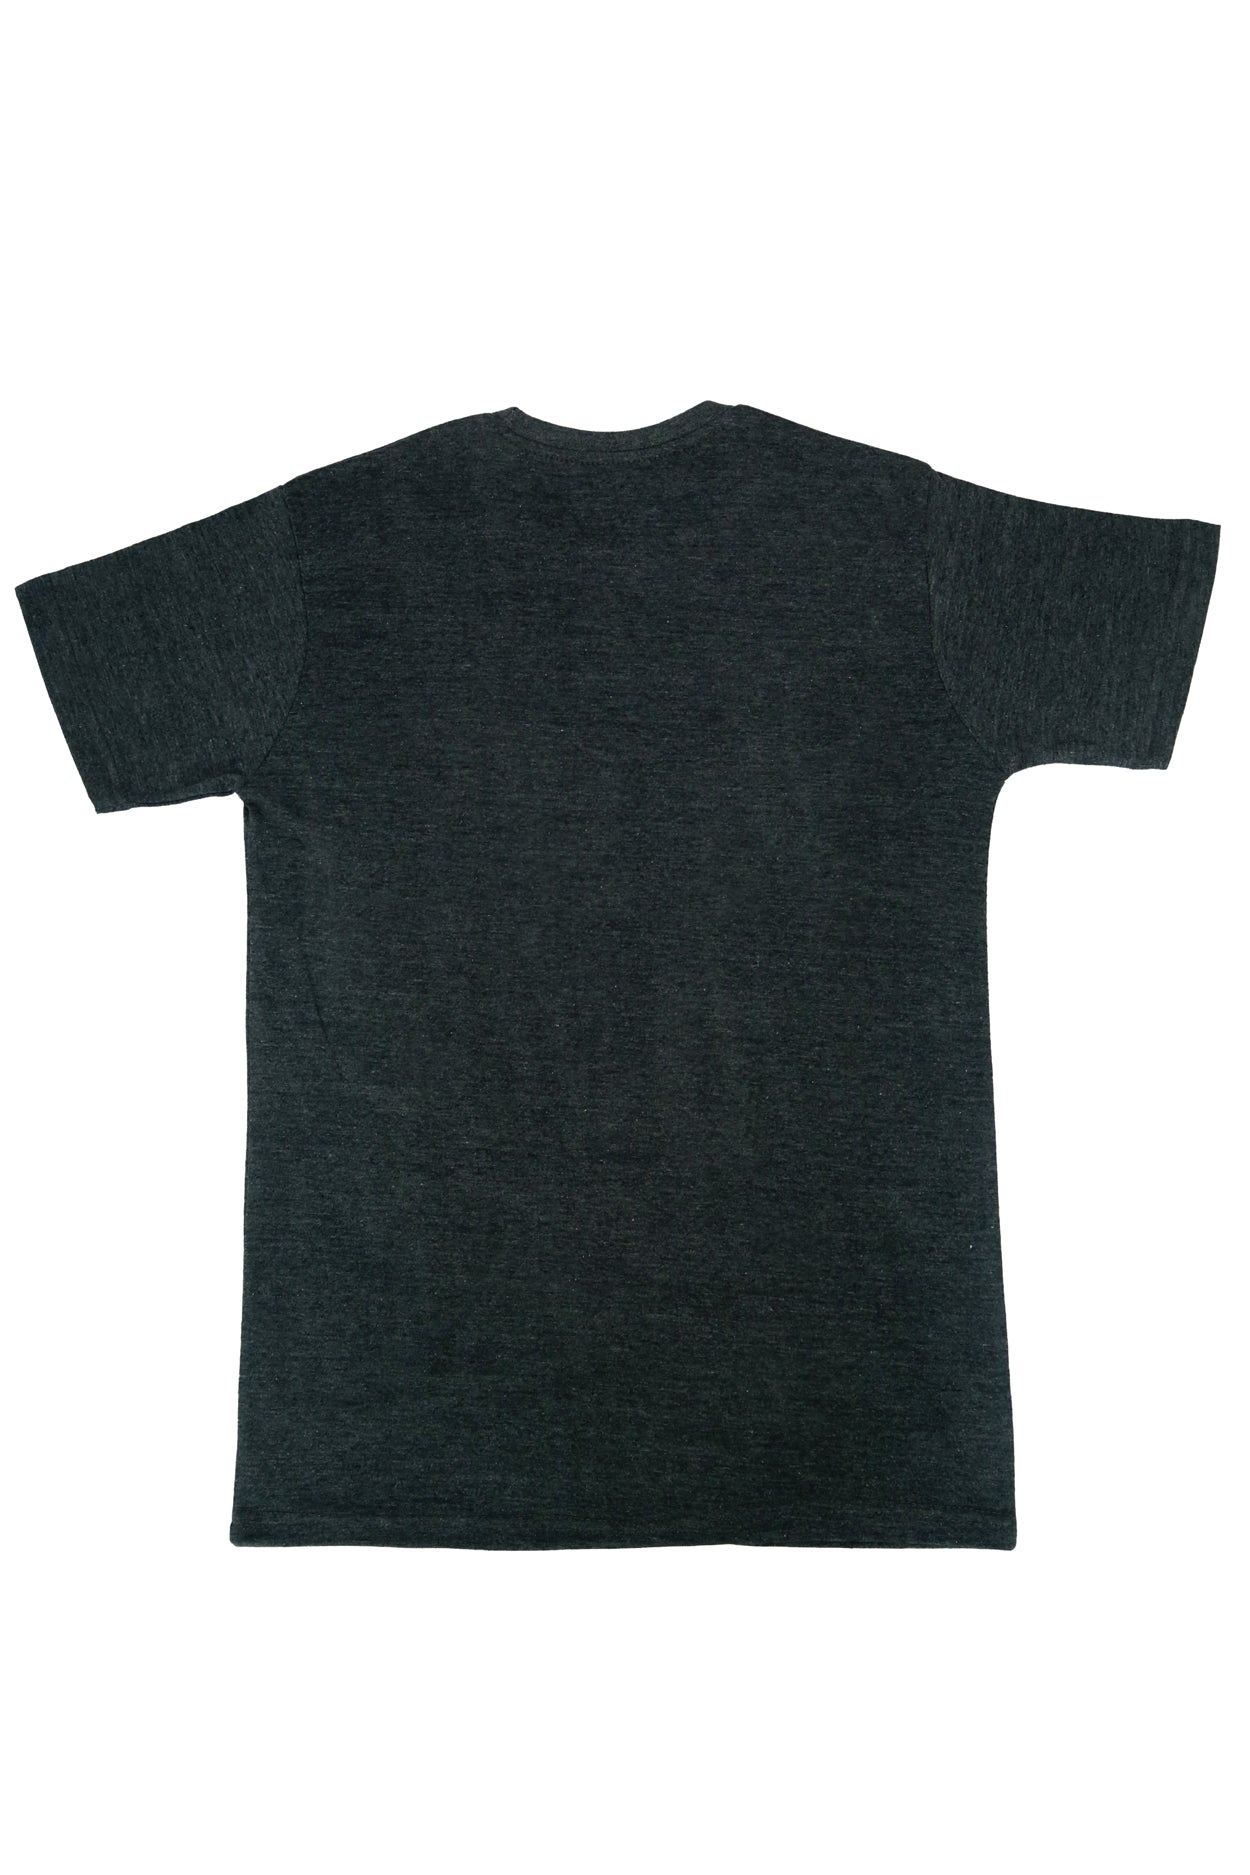 Unisex Dubai Short Sleeve T-Shirt D-186